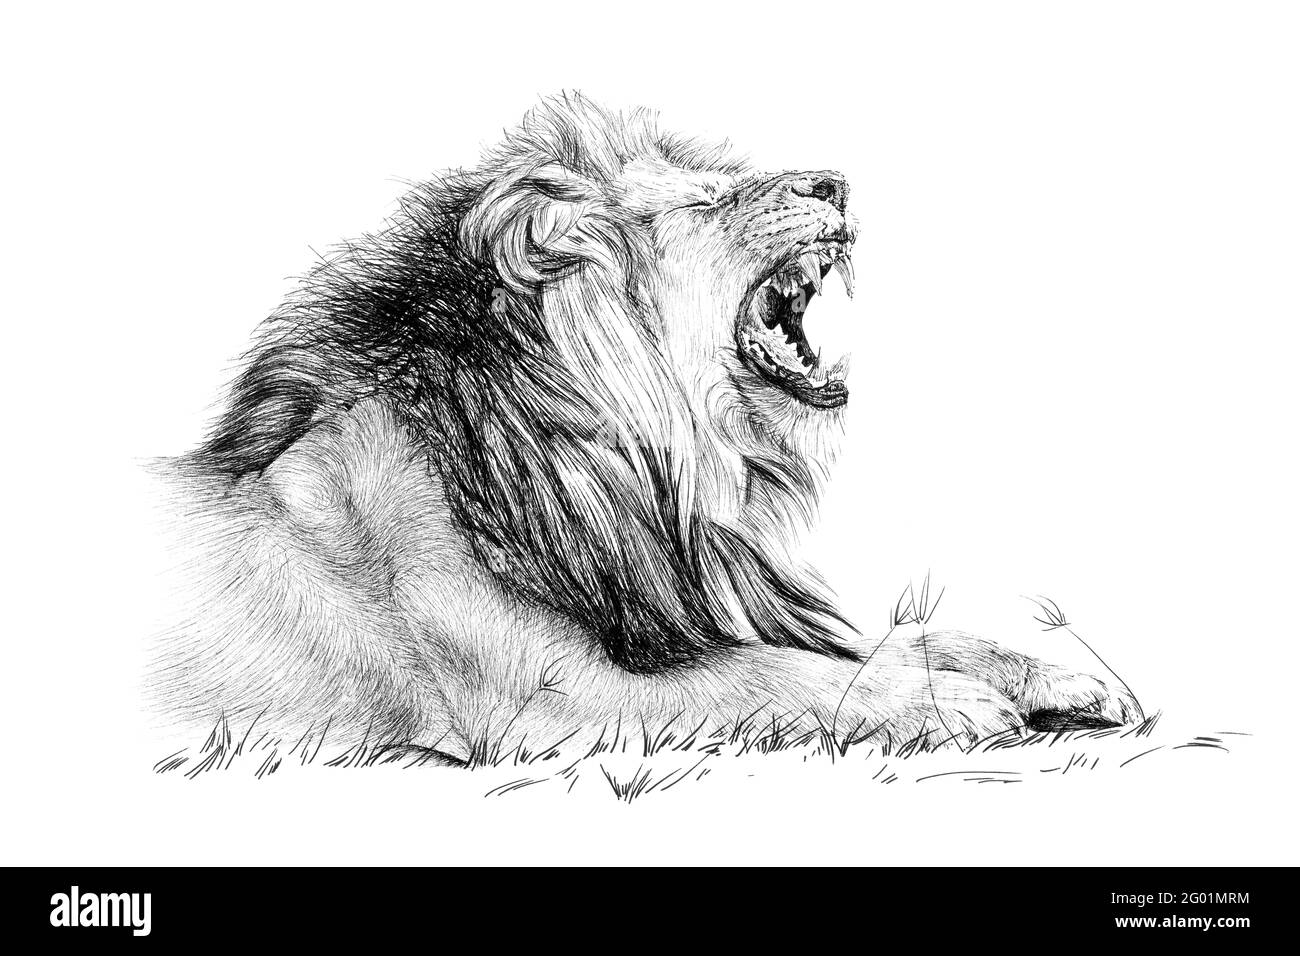 Lion roar Cut Out Stock Images & Pictures - Alamy